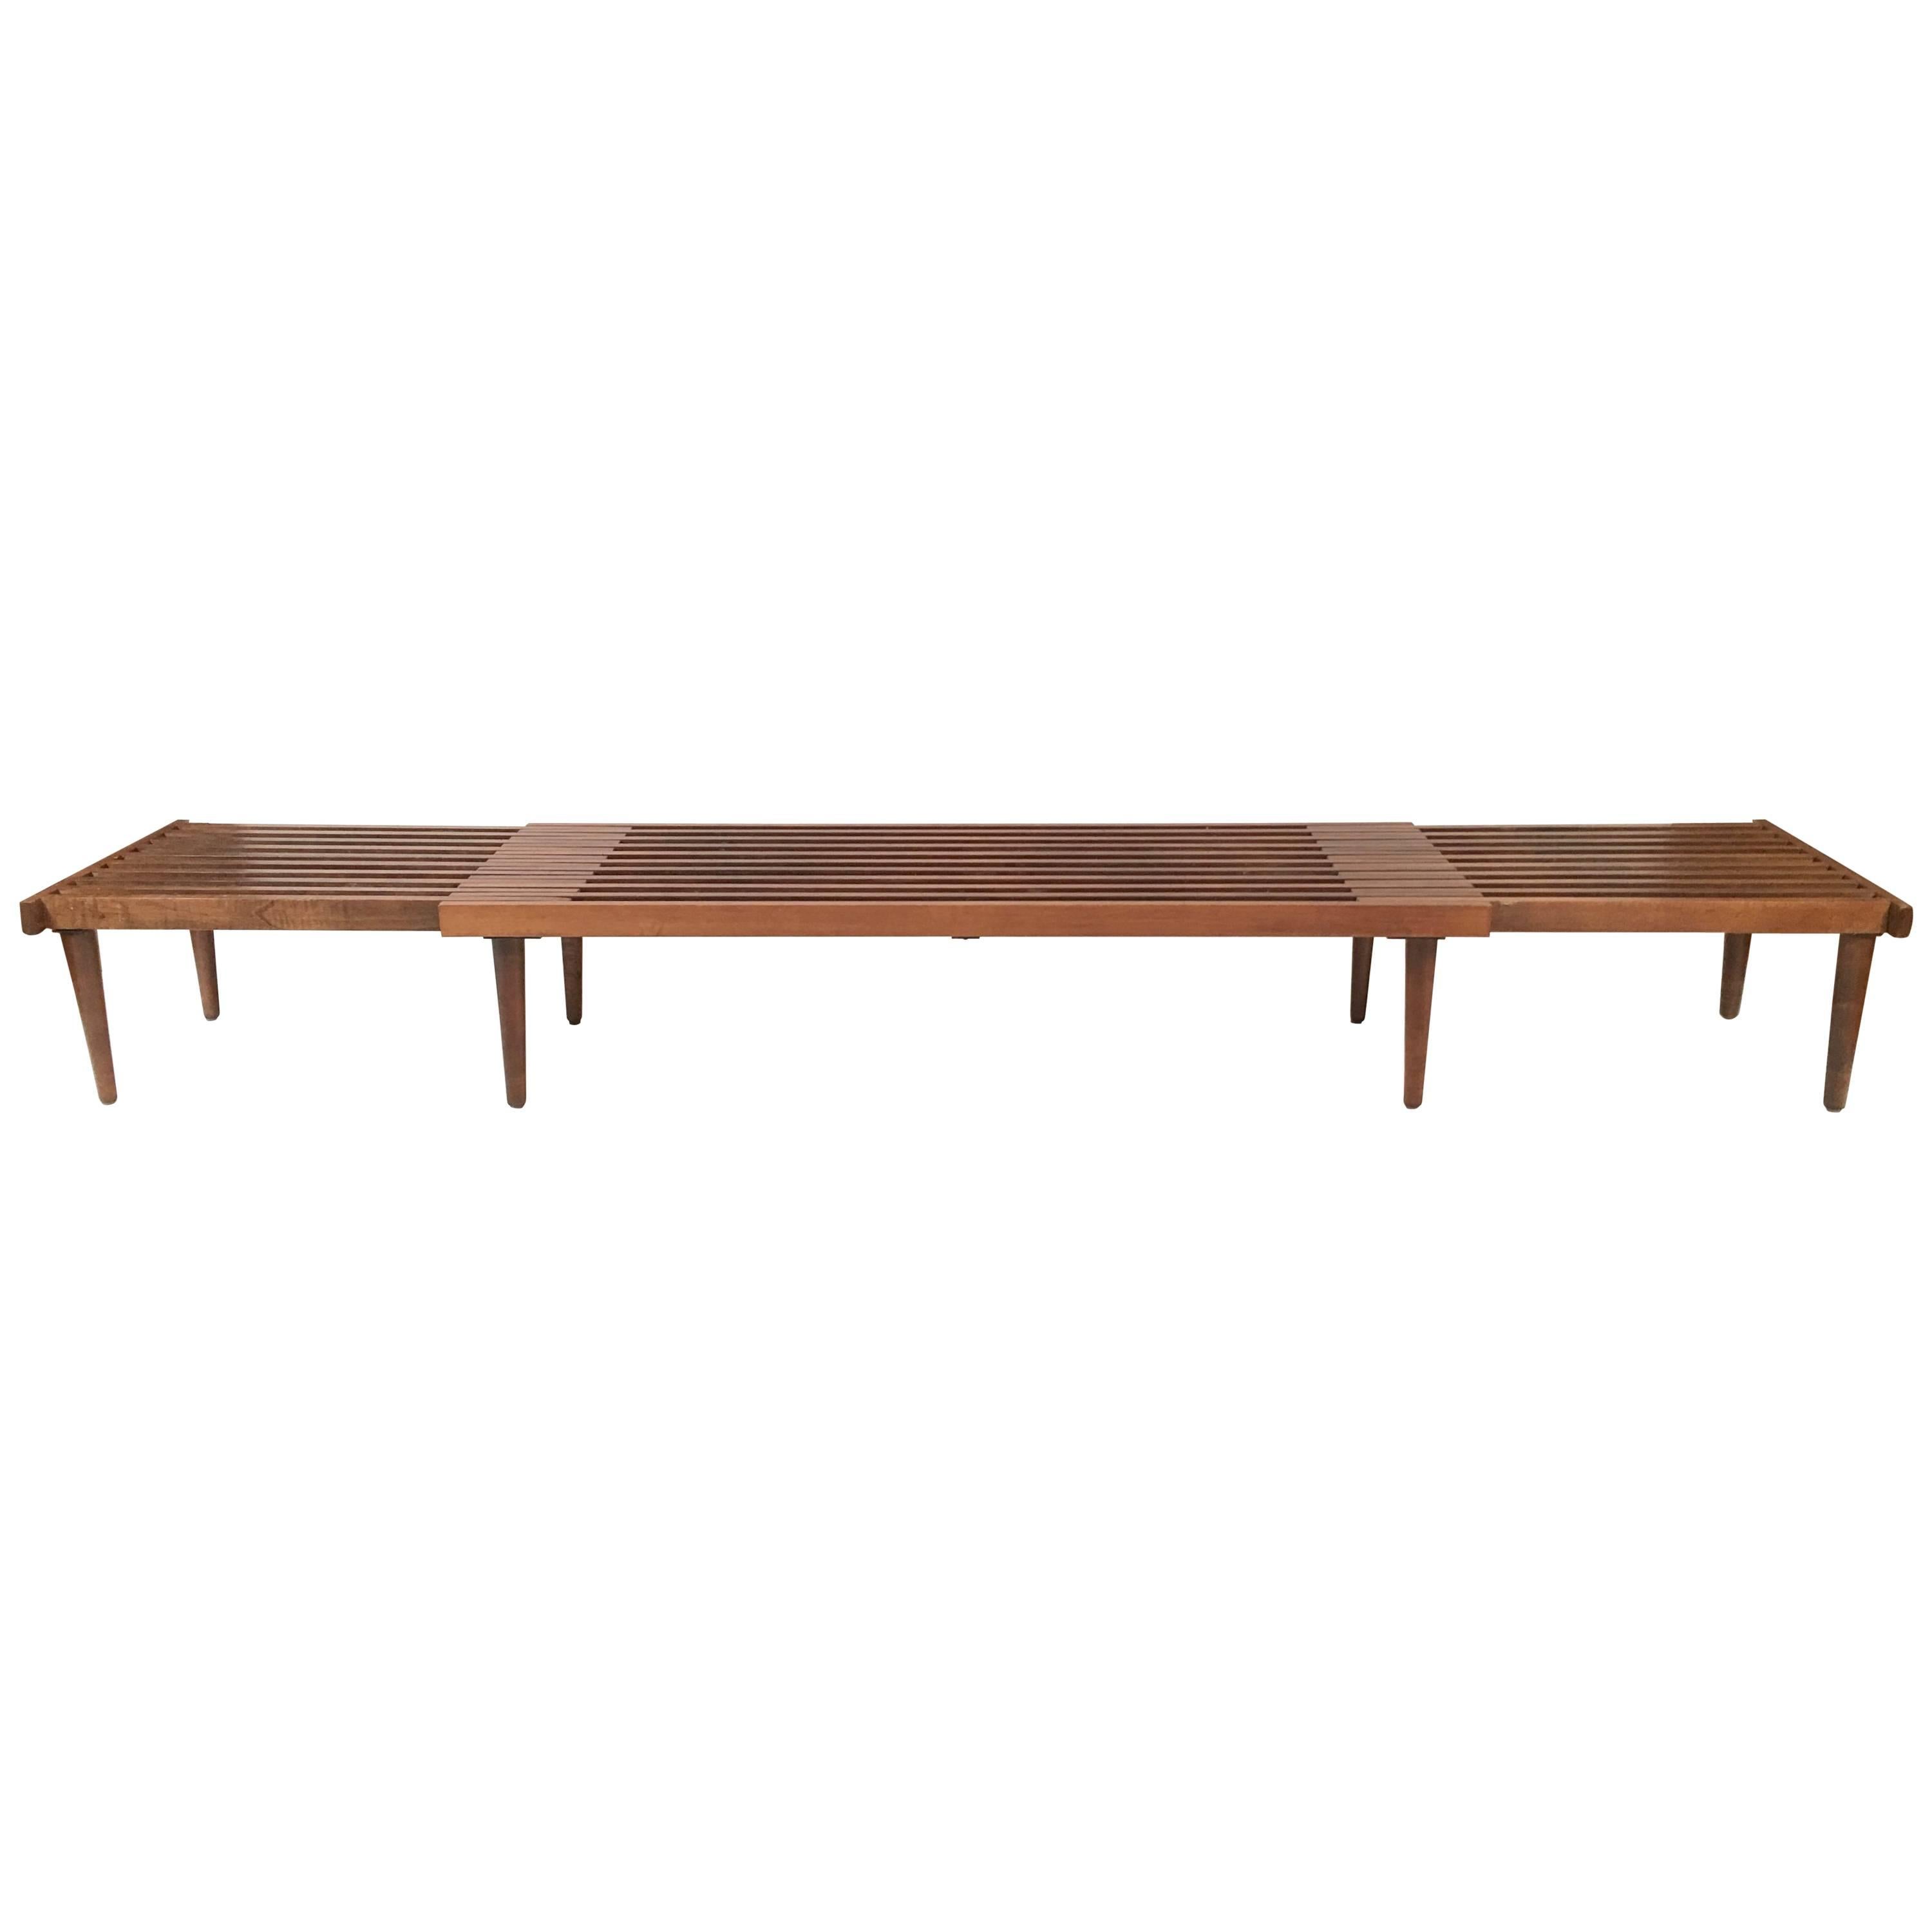 Mid-Century Slat Wood Bench or Coffee Table, Adjustable Length